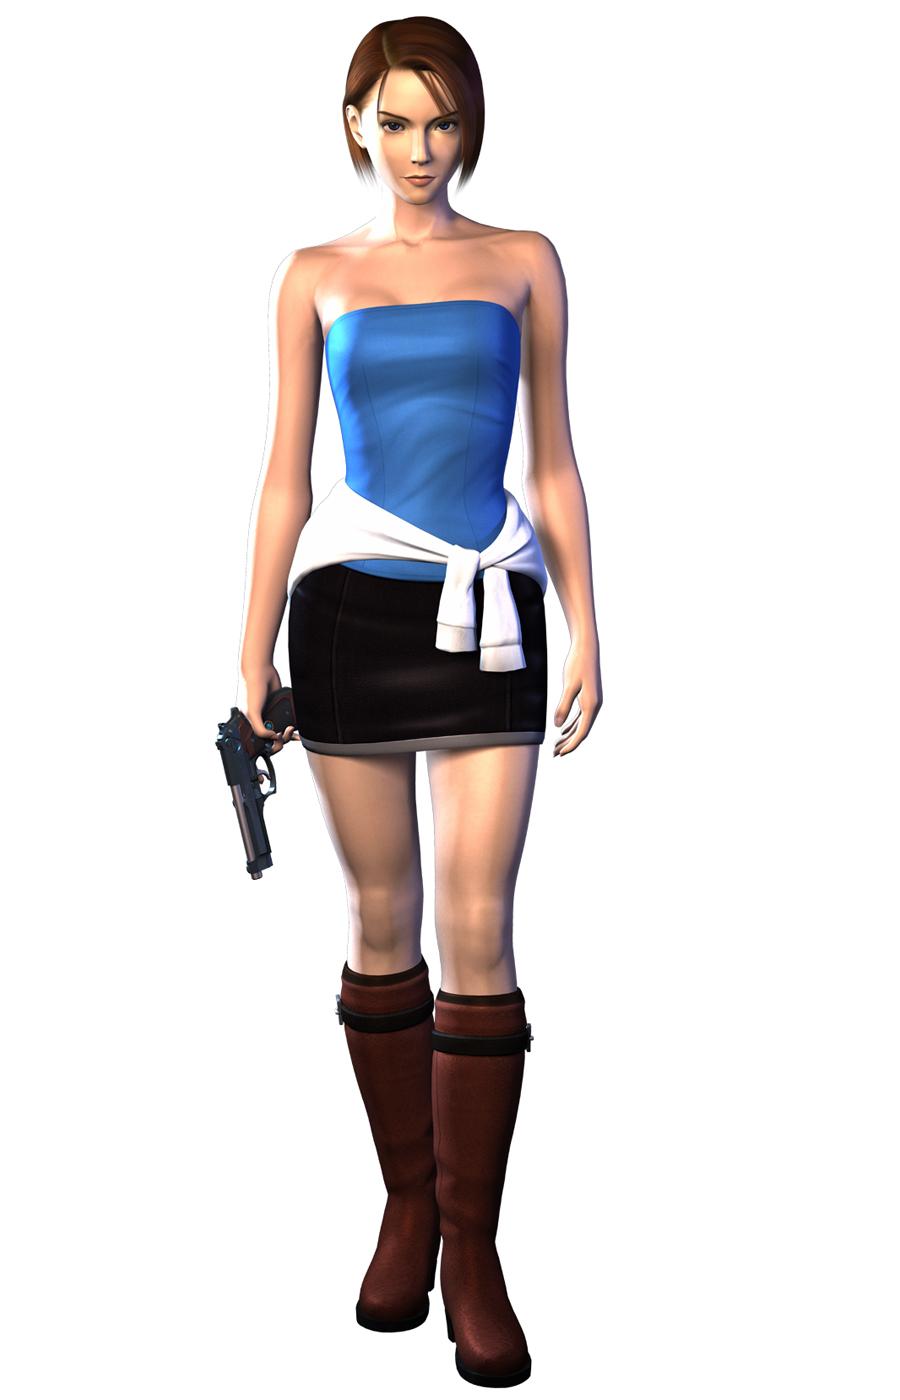 7. Jill Valentine (Resident Evil)